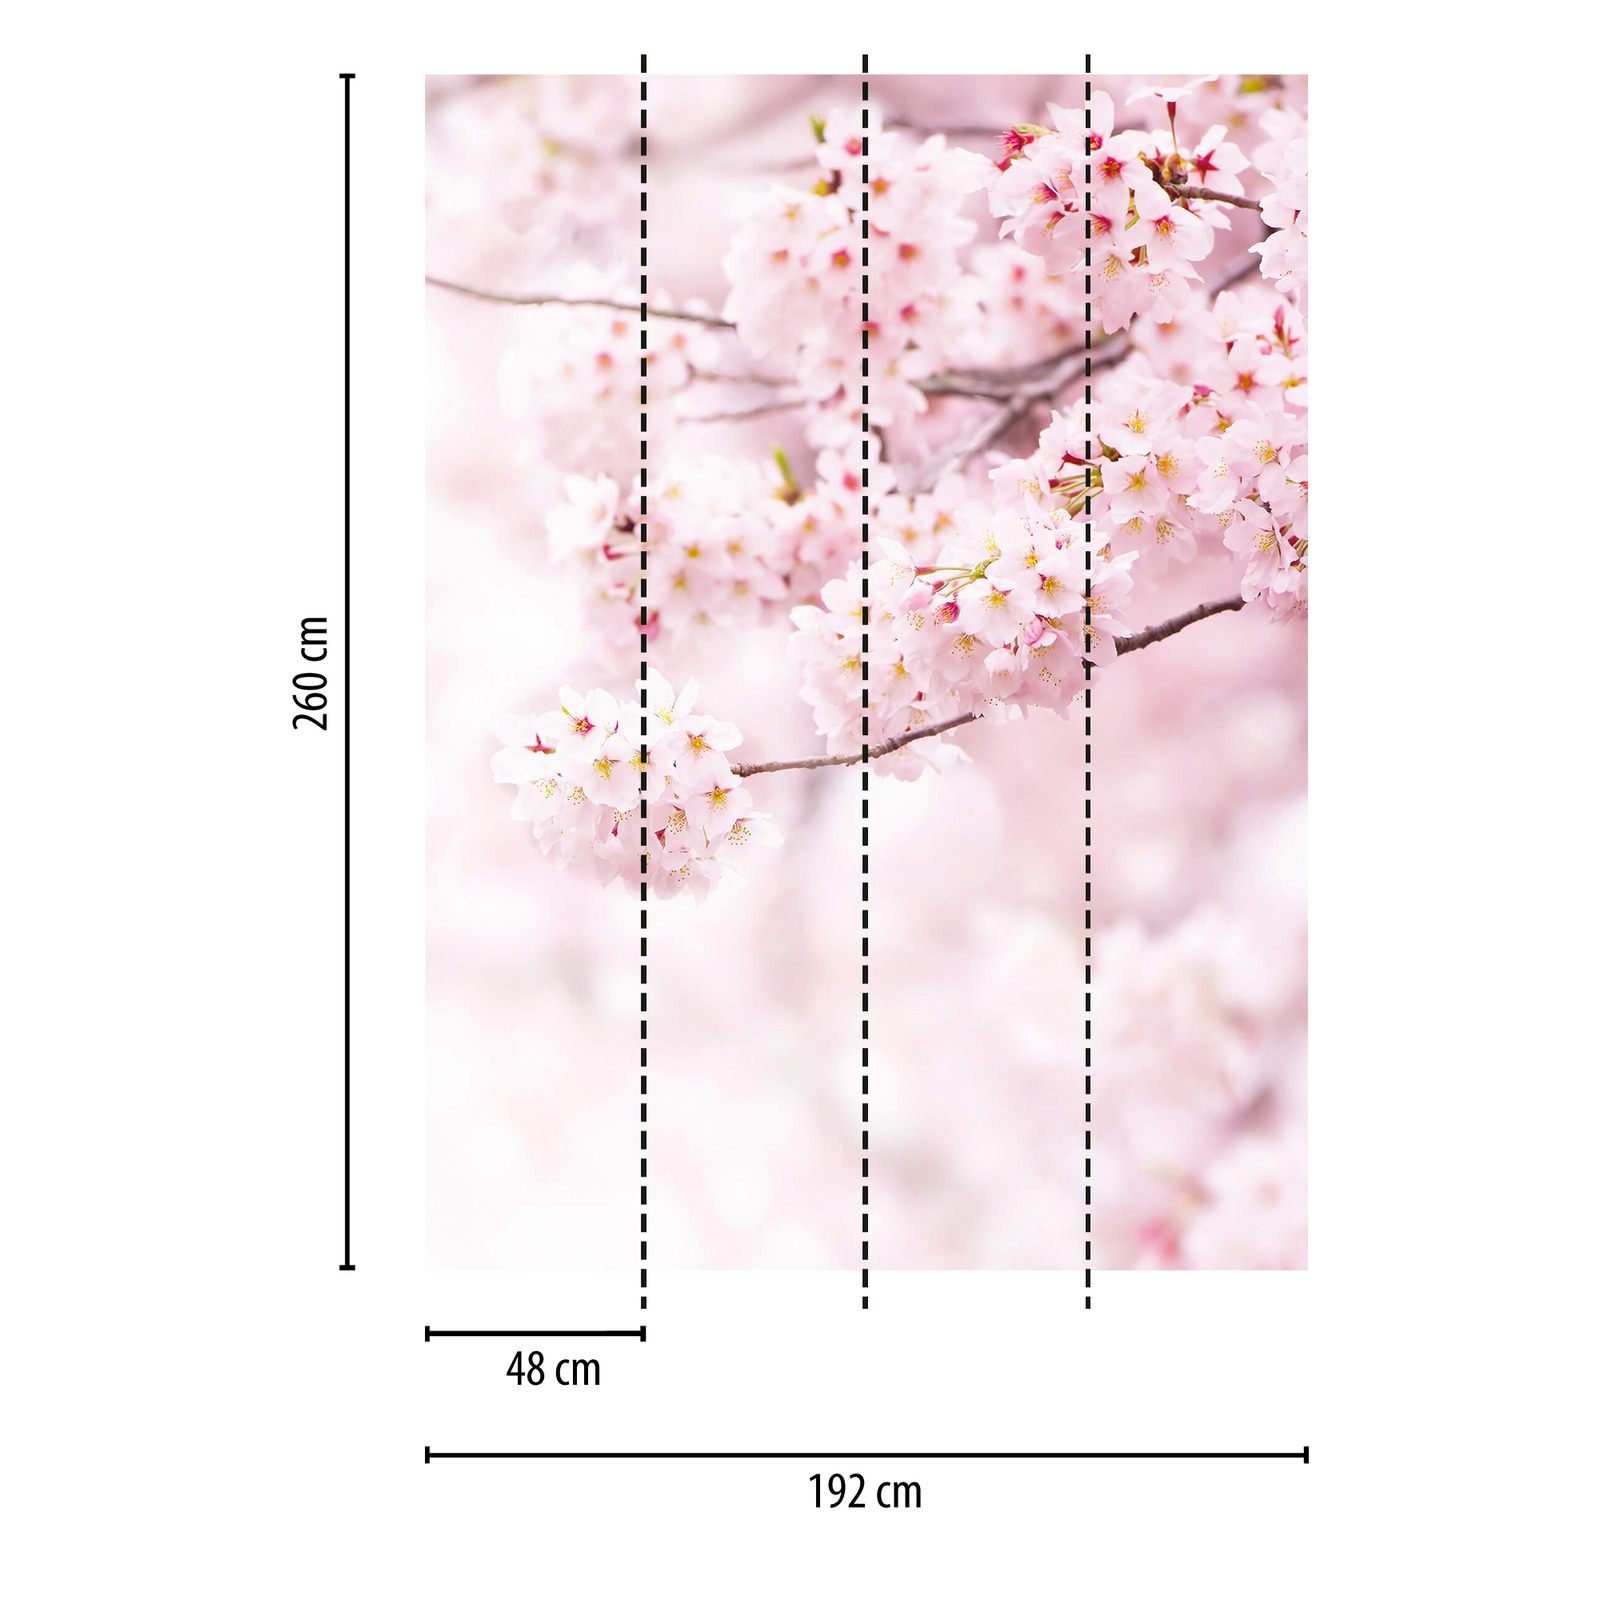             Narrow Spring Flowers Behang - Roze, Wit
        